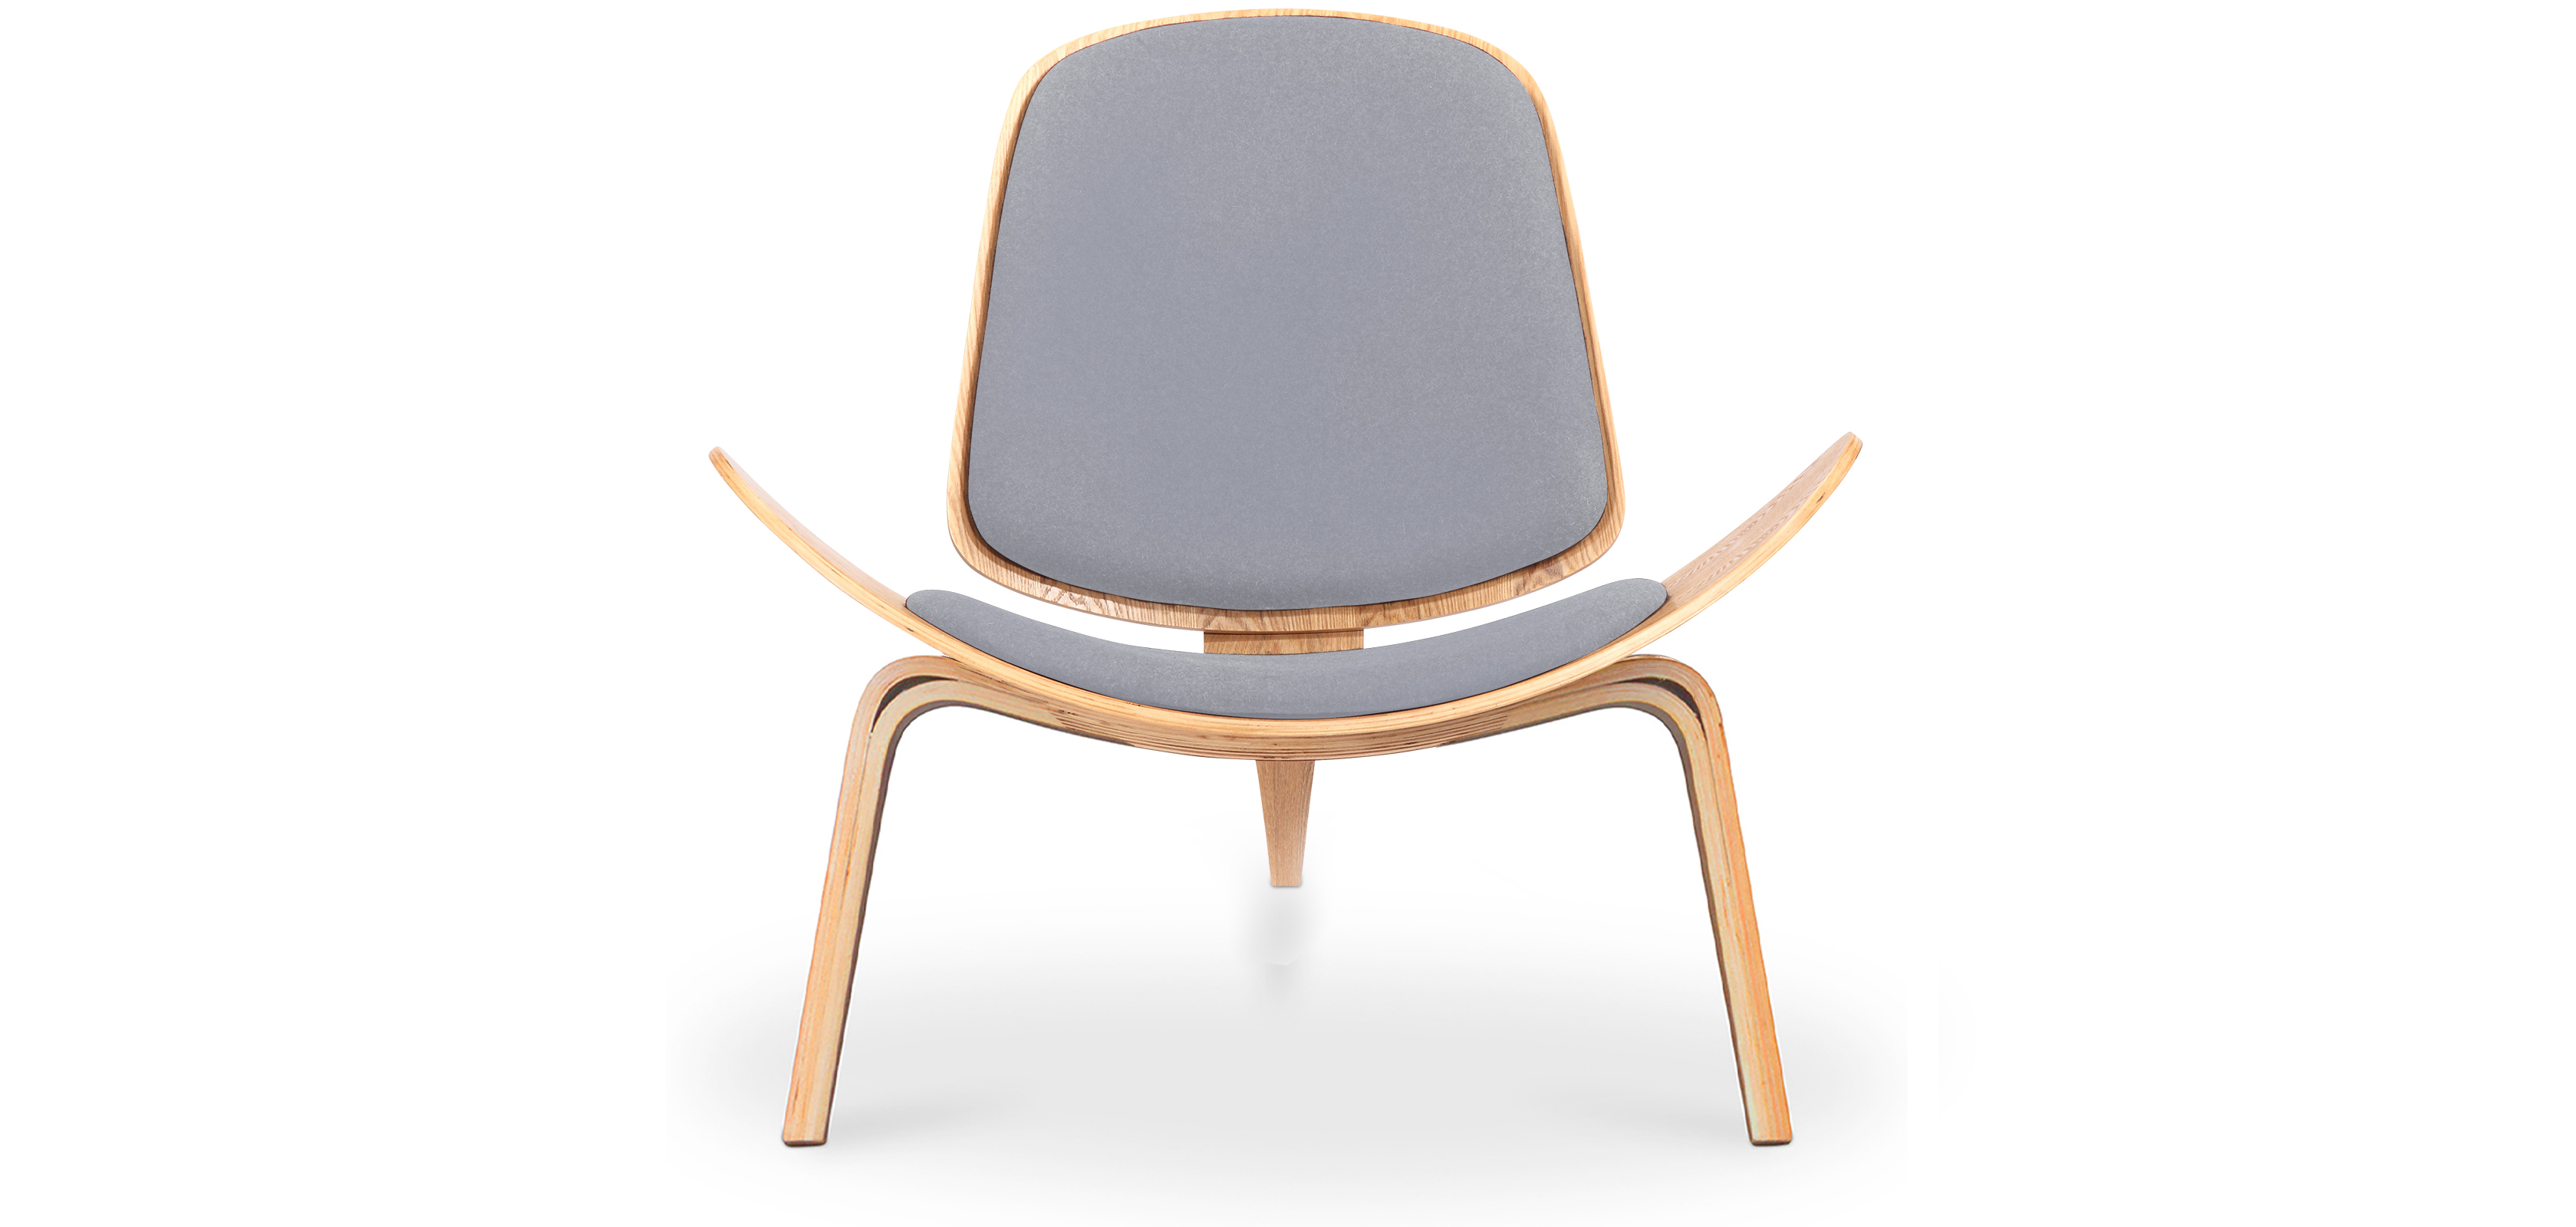 Buy CV07 Lounge Chair Design Boho Bali - Cashmere Light grey 16773 - in the EU